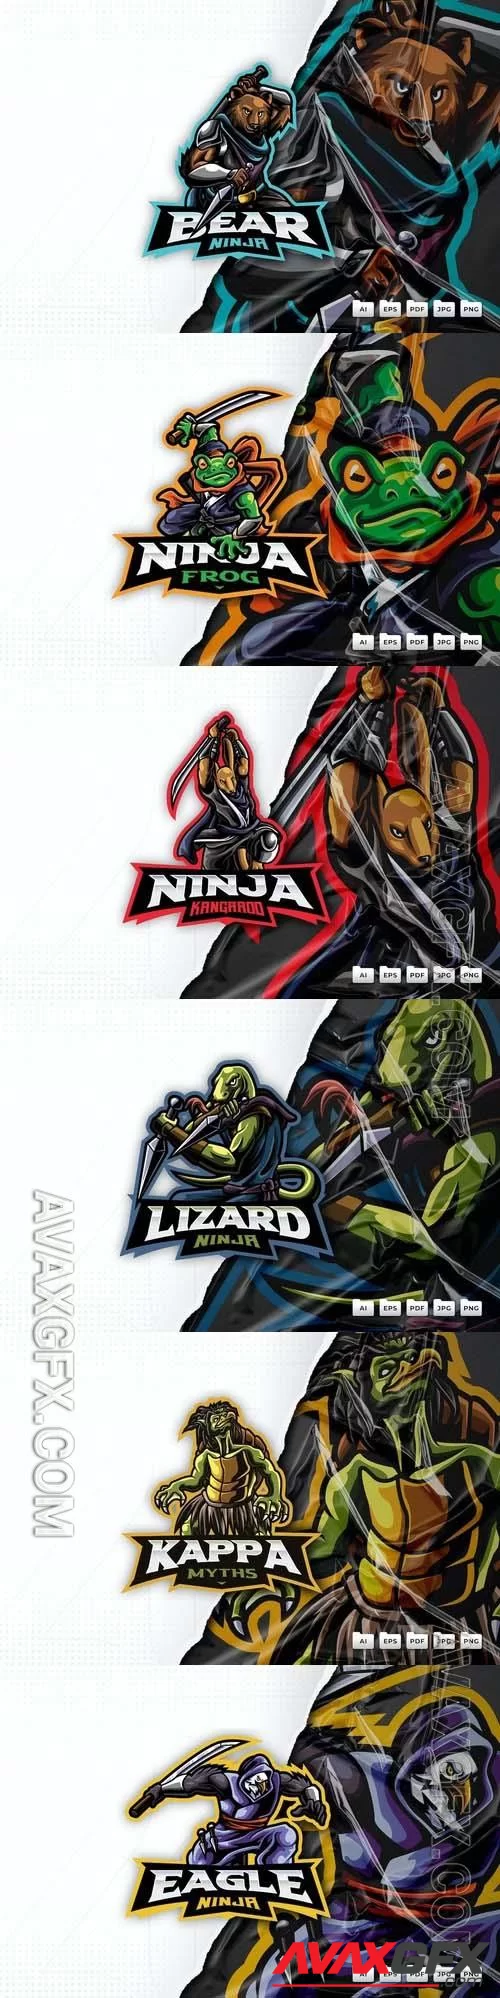 Eagle, frog, kangaroo, lizard, bear  ninja, kappa yokai mascot logo design